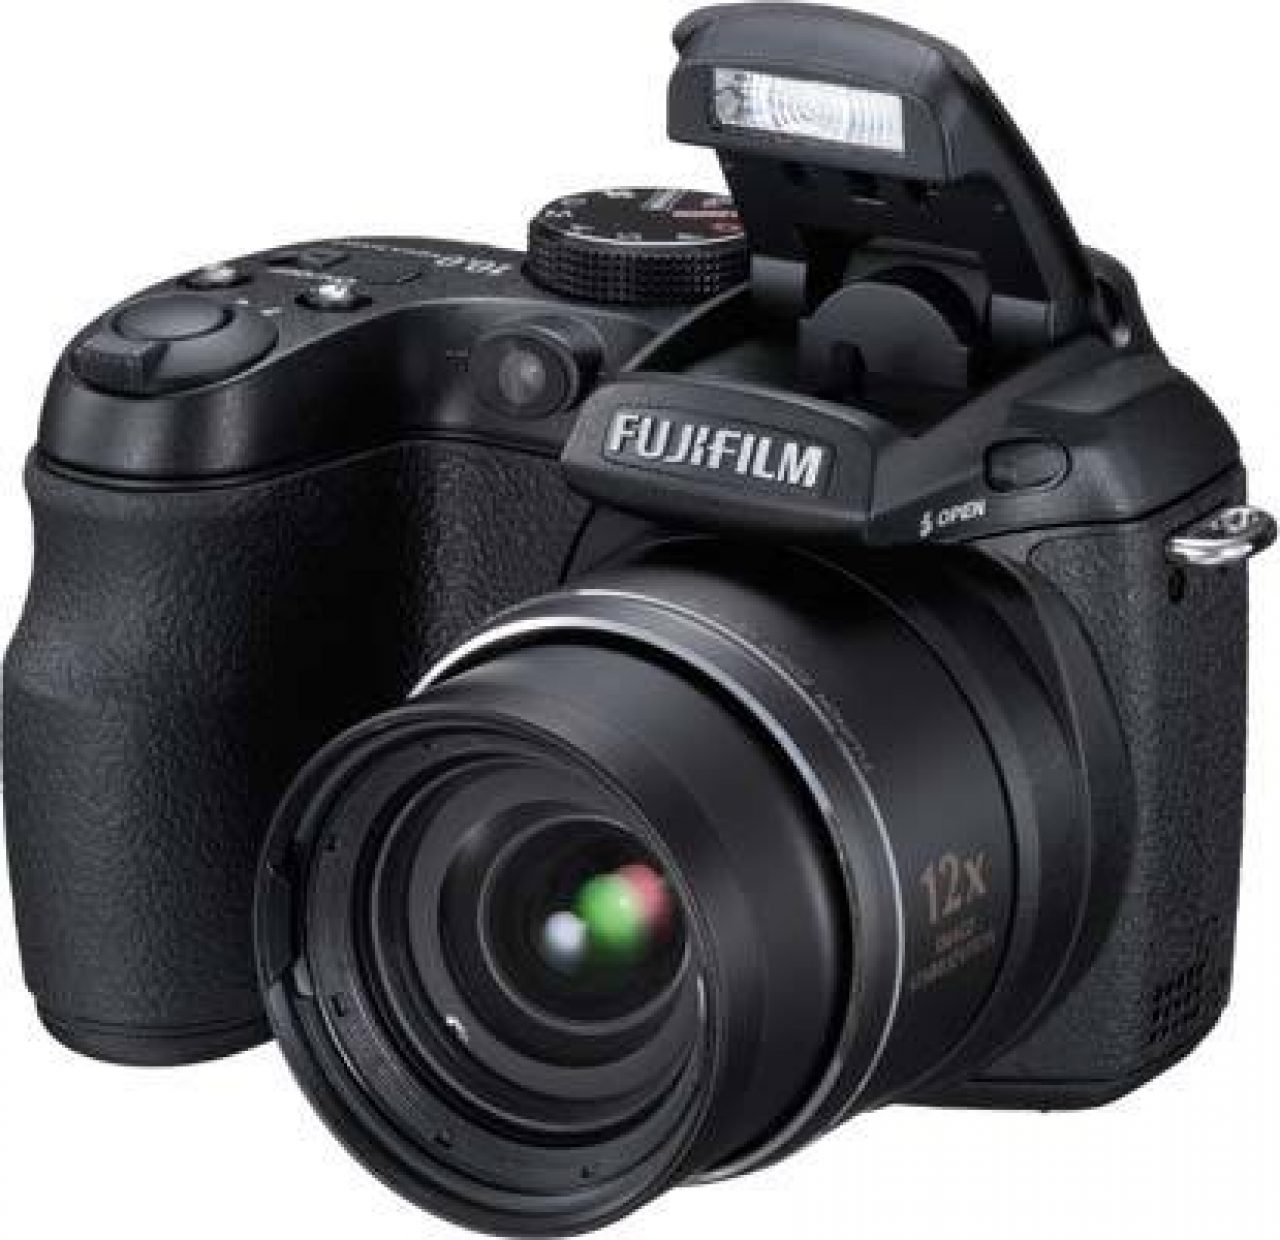 Gewaad Ver weg Winderig Fujifilm FinePix S1500 Review | Photography Blog